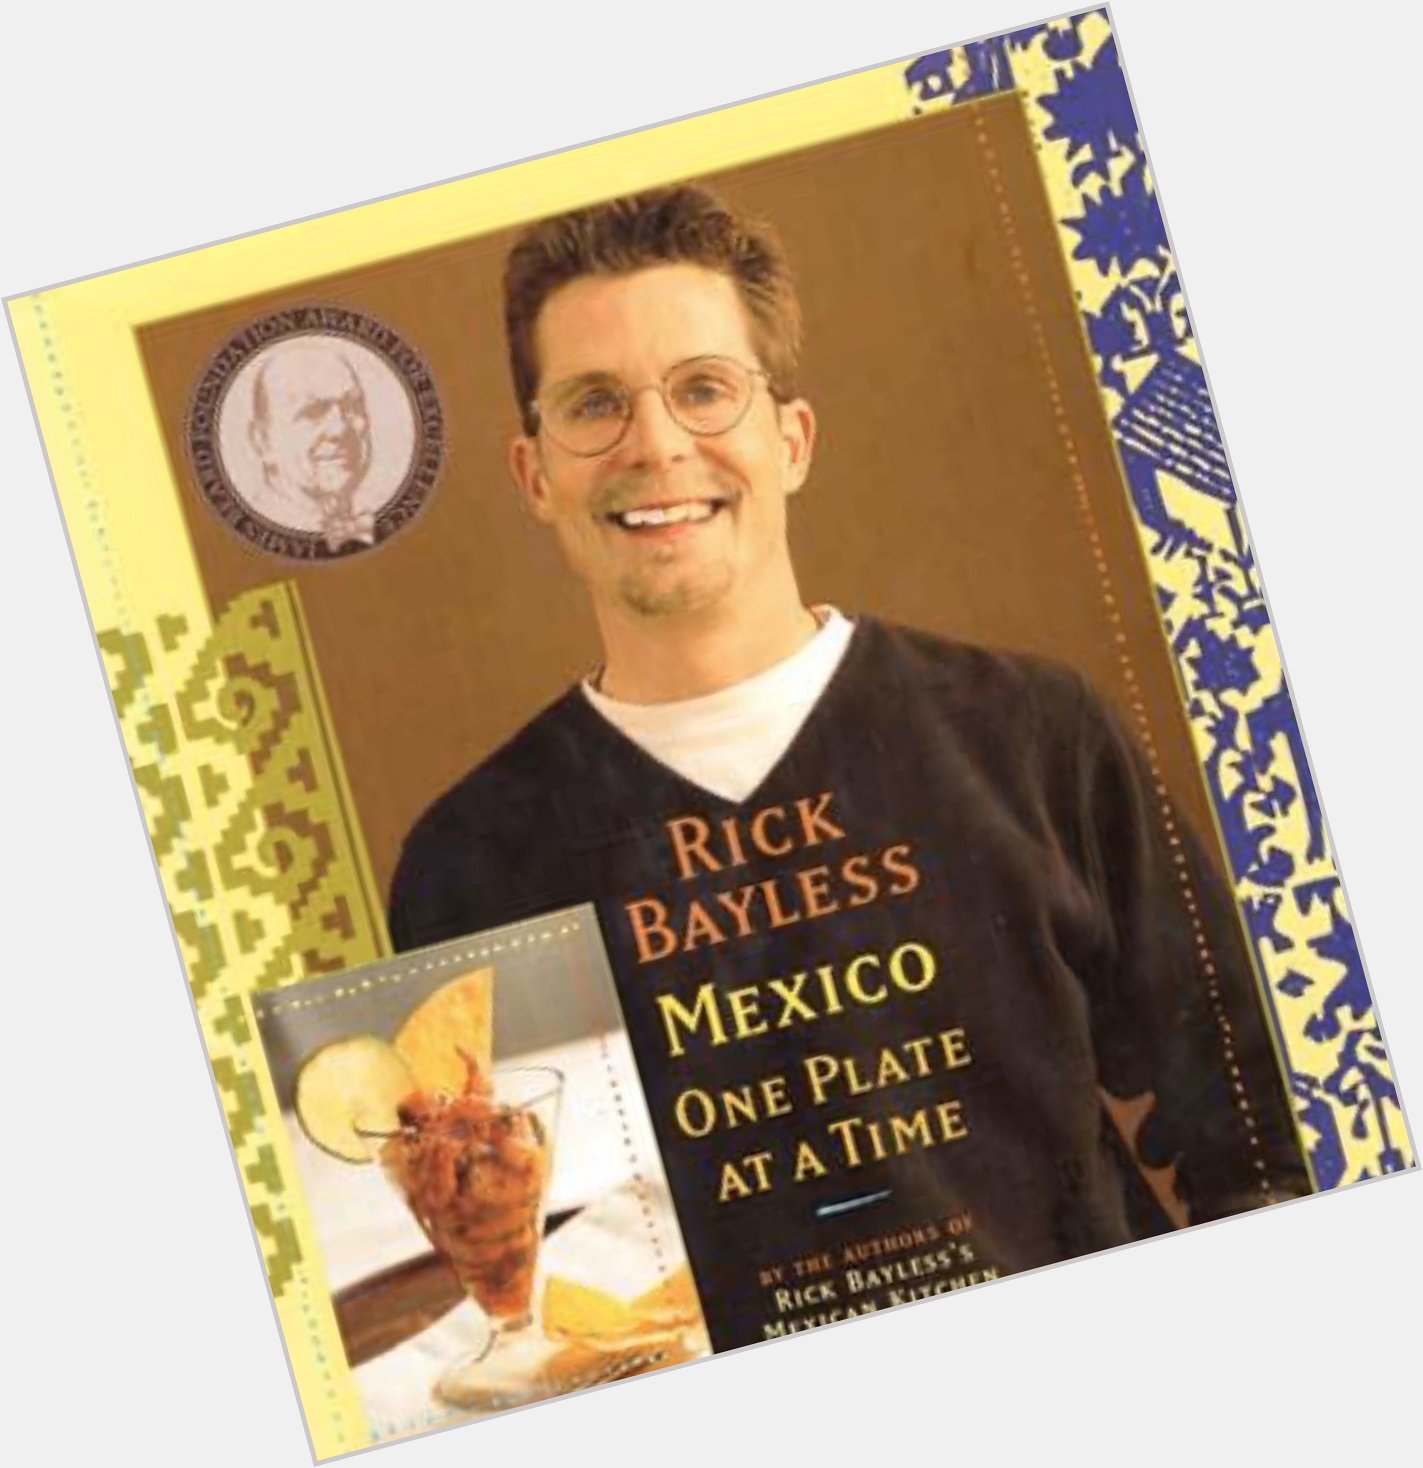 Happy Birthday to Rick Bayless -- chef, cookbook author, and Cookbook Village customer favorite! 